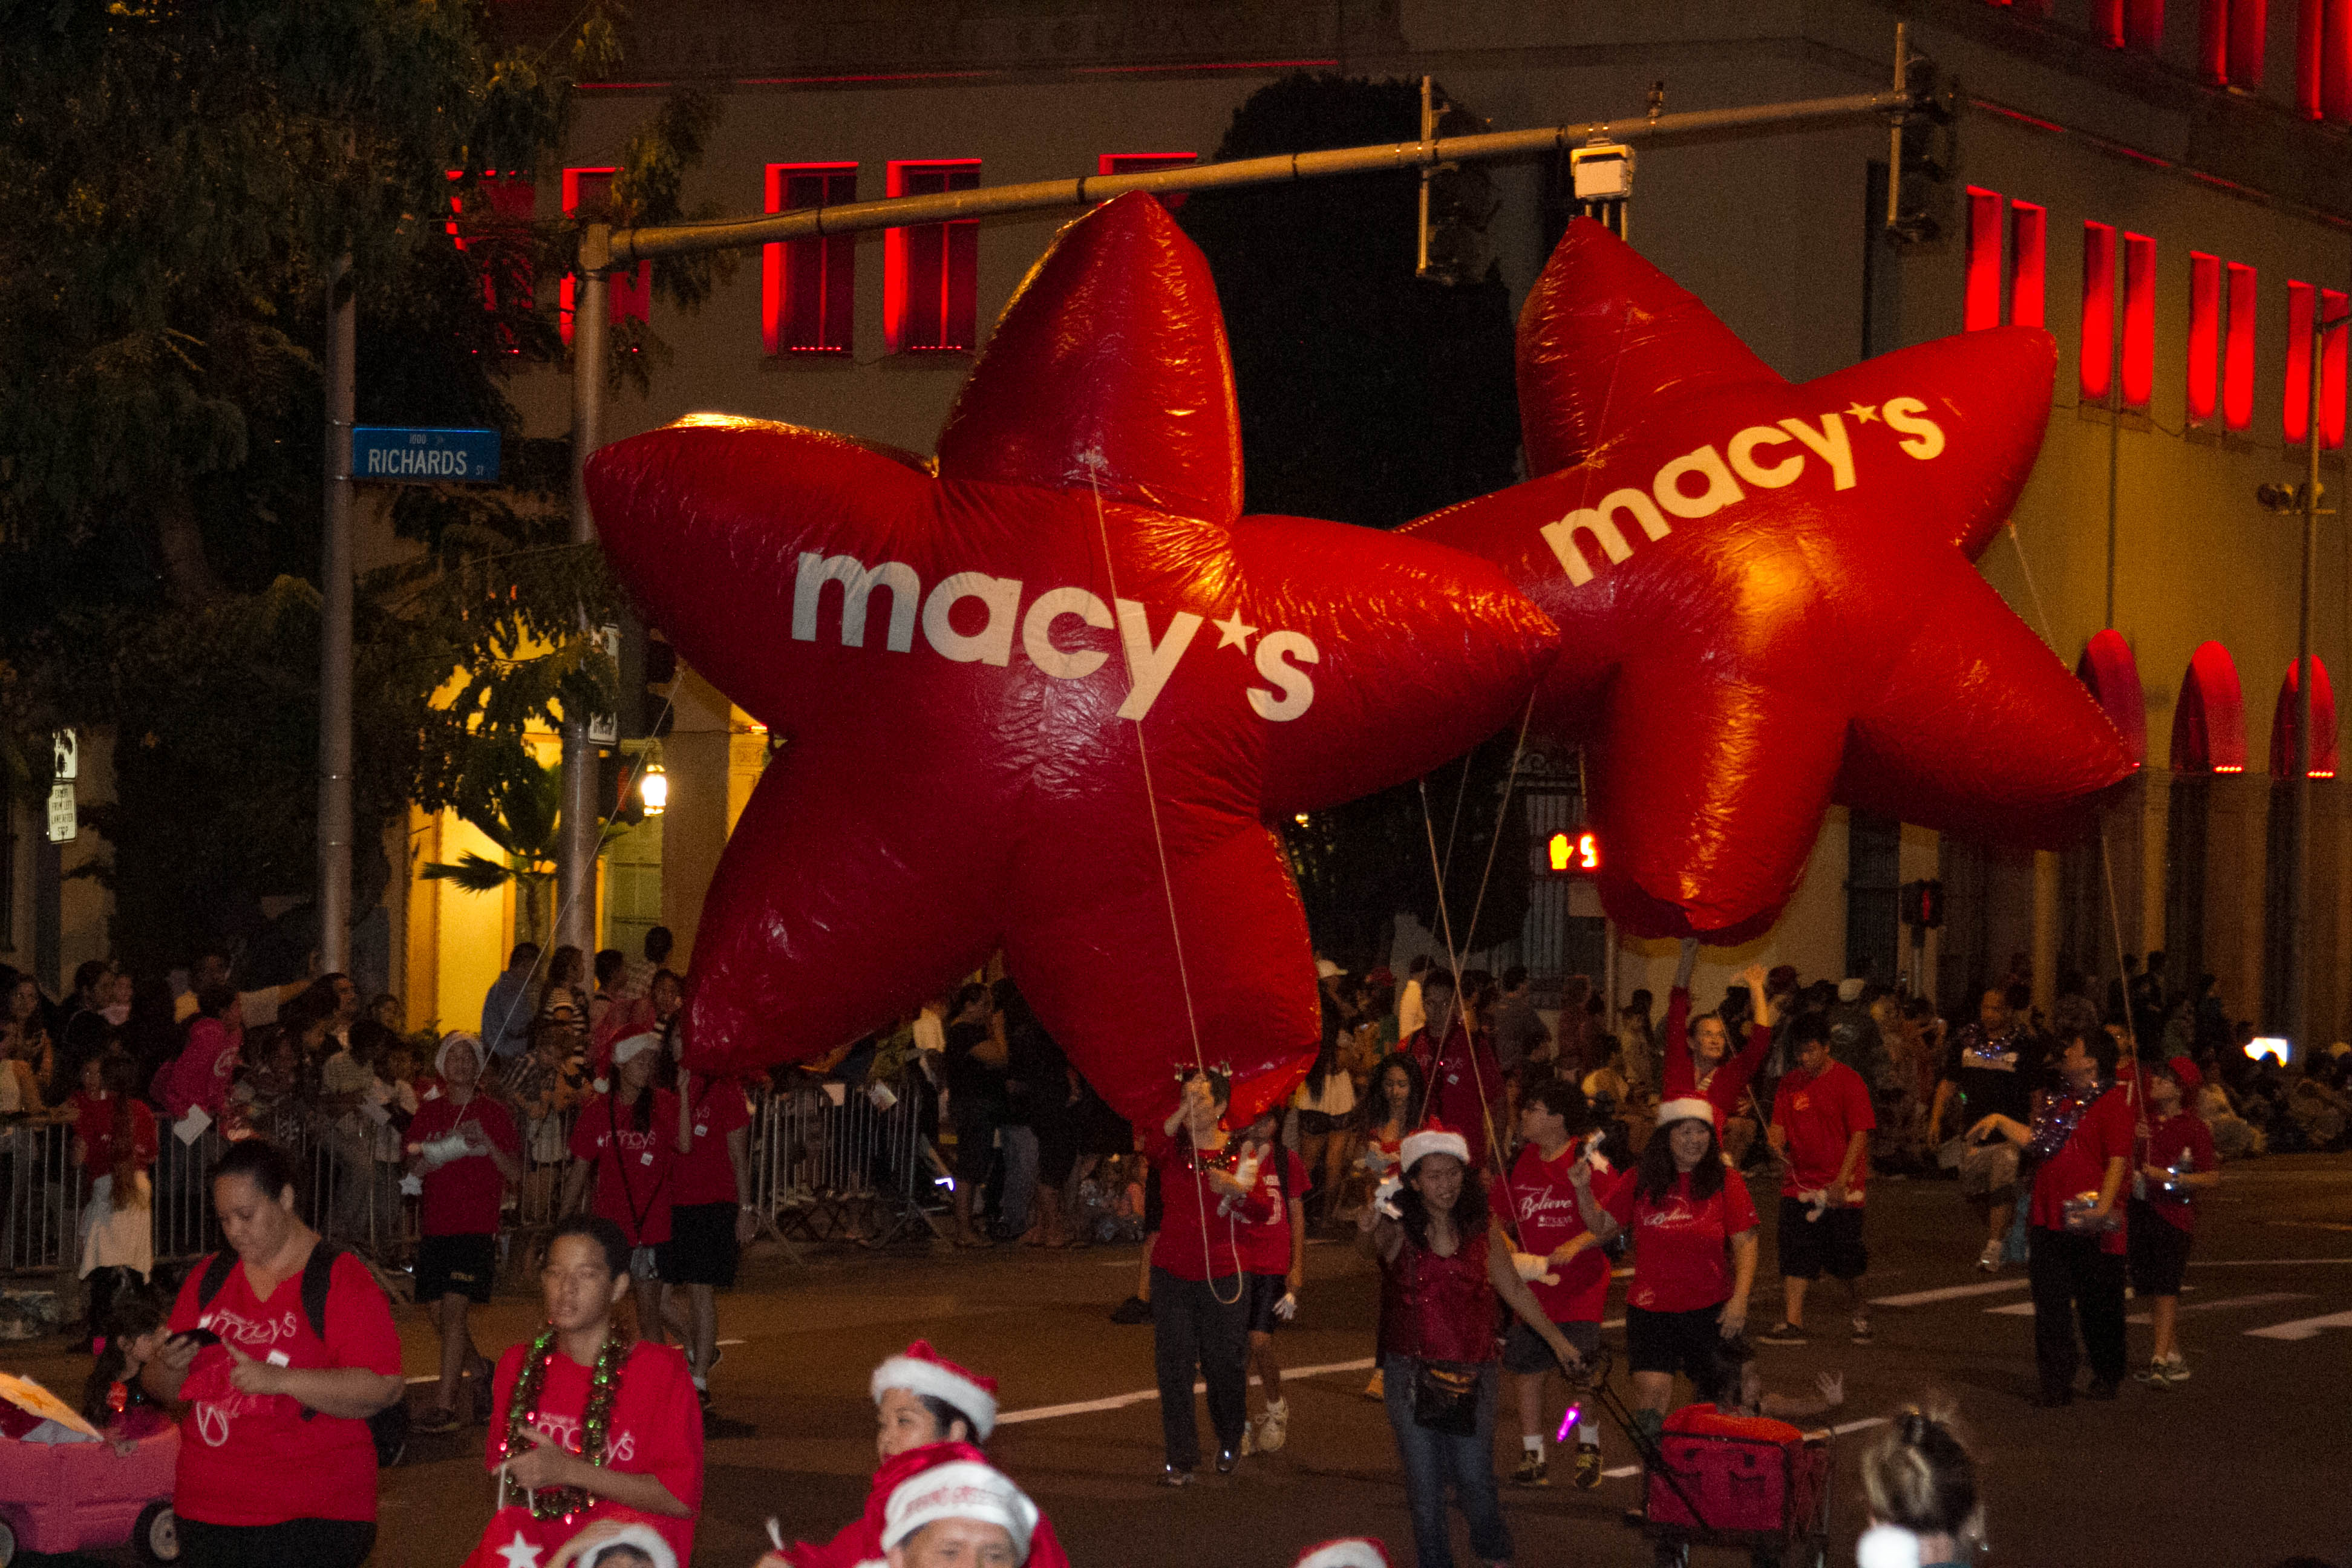 Macyʻs Balloons